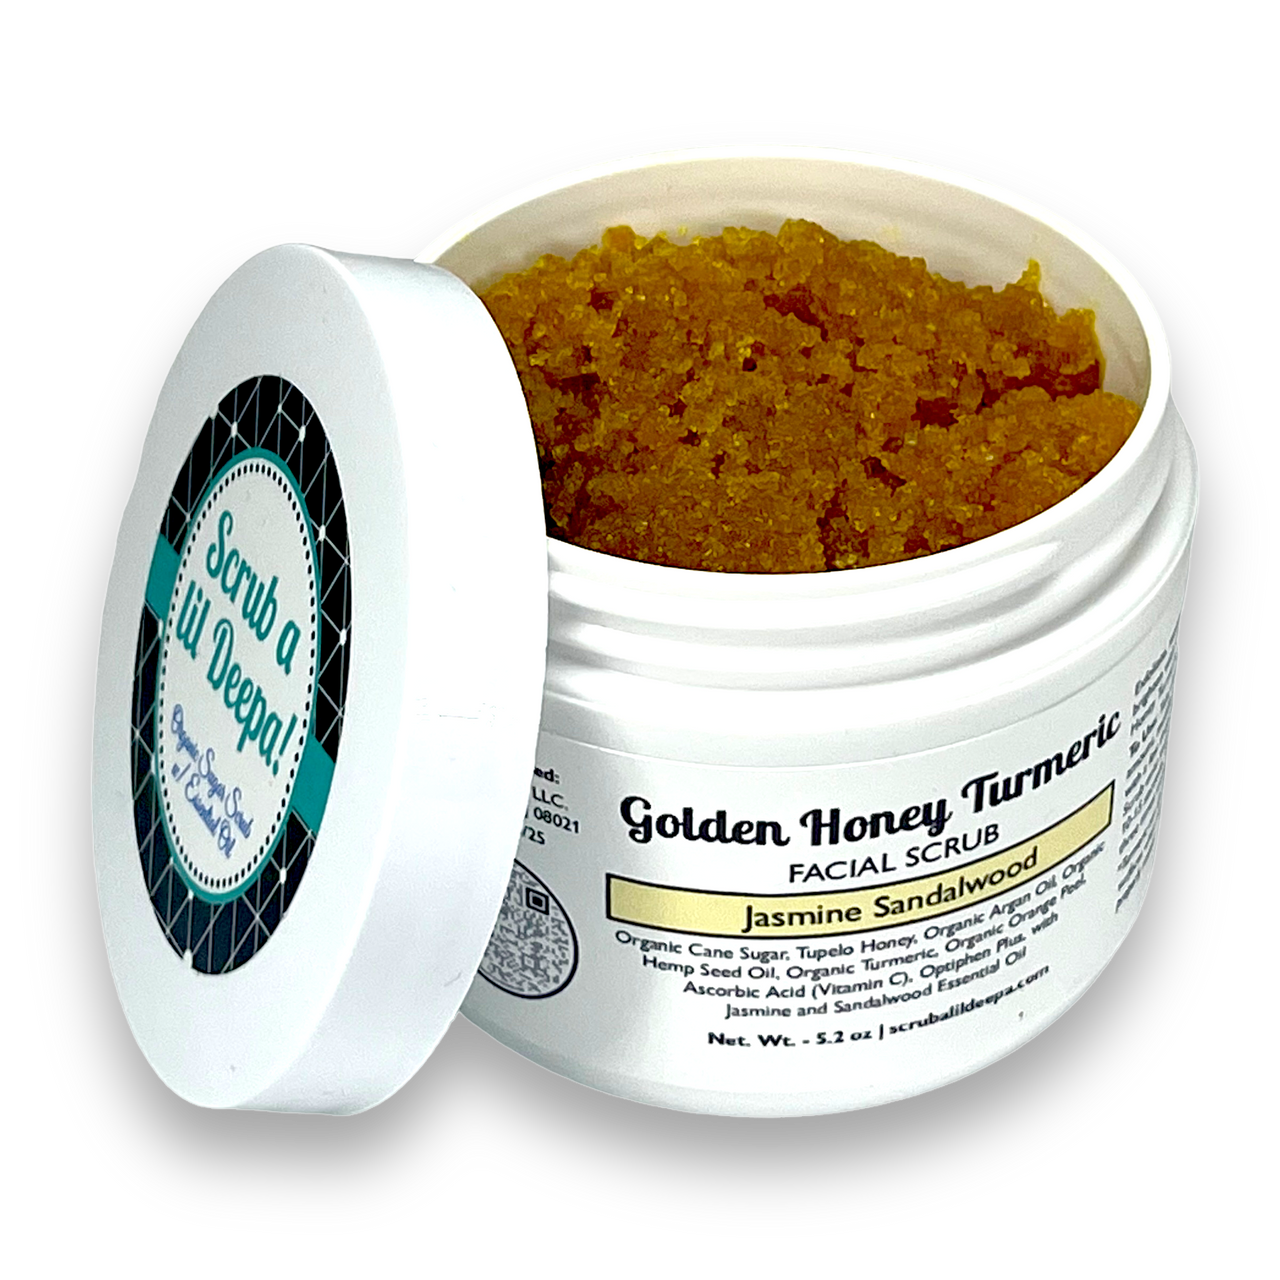 Golden Honey Turmeric Facial Scrub - Jasmine Sandalwood